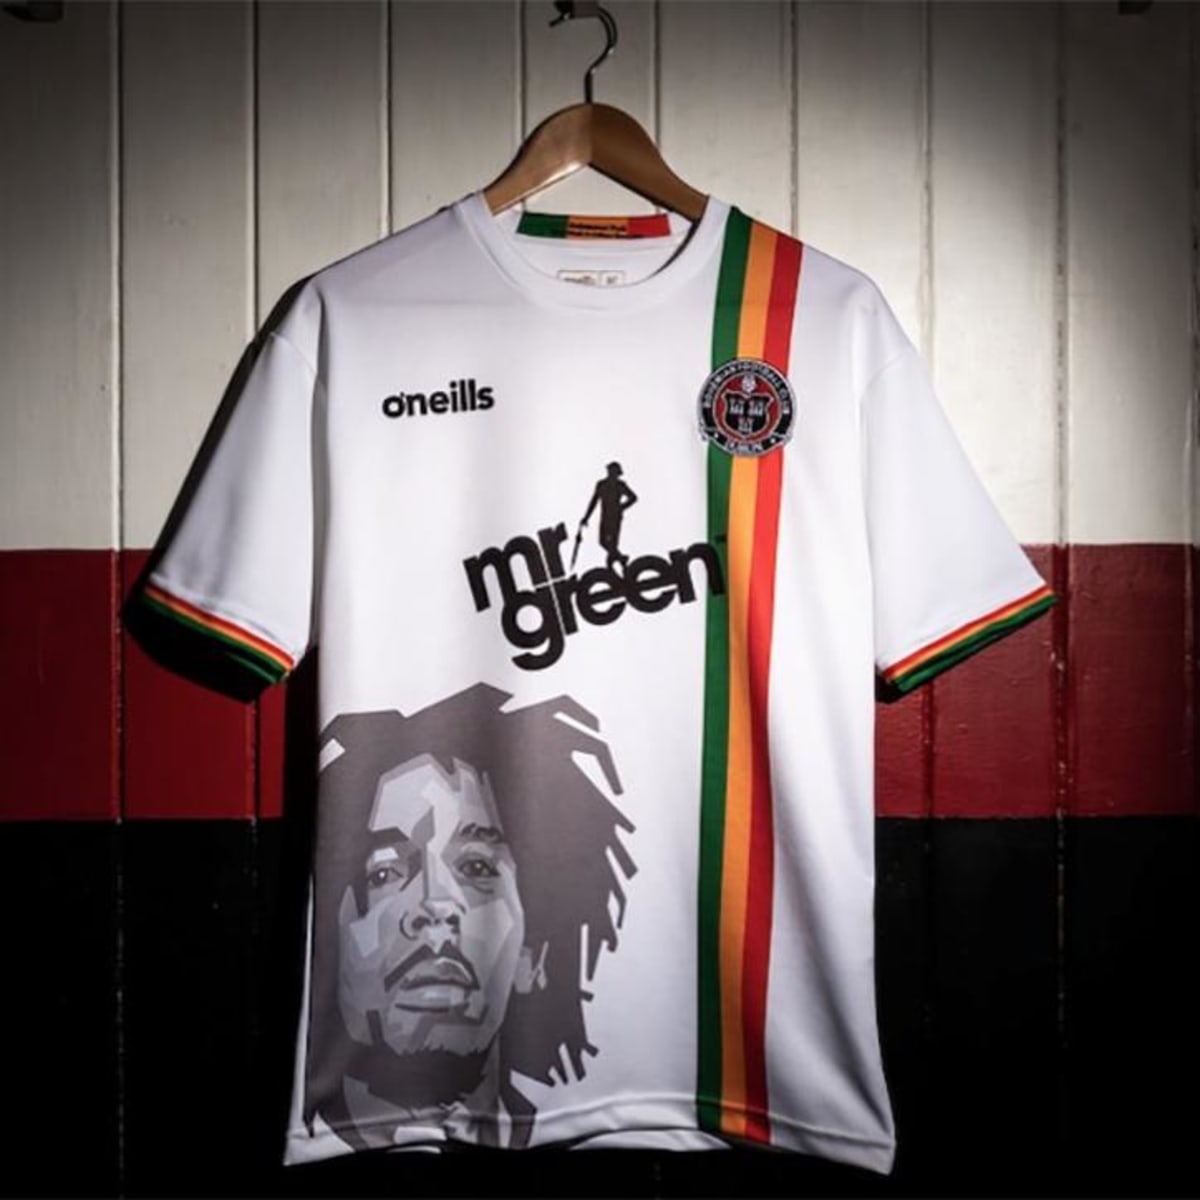 Bob Marley featured on Bohemian FC jerseys (photos) - Sports Illustrated